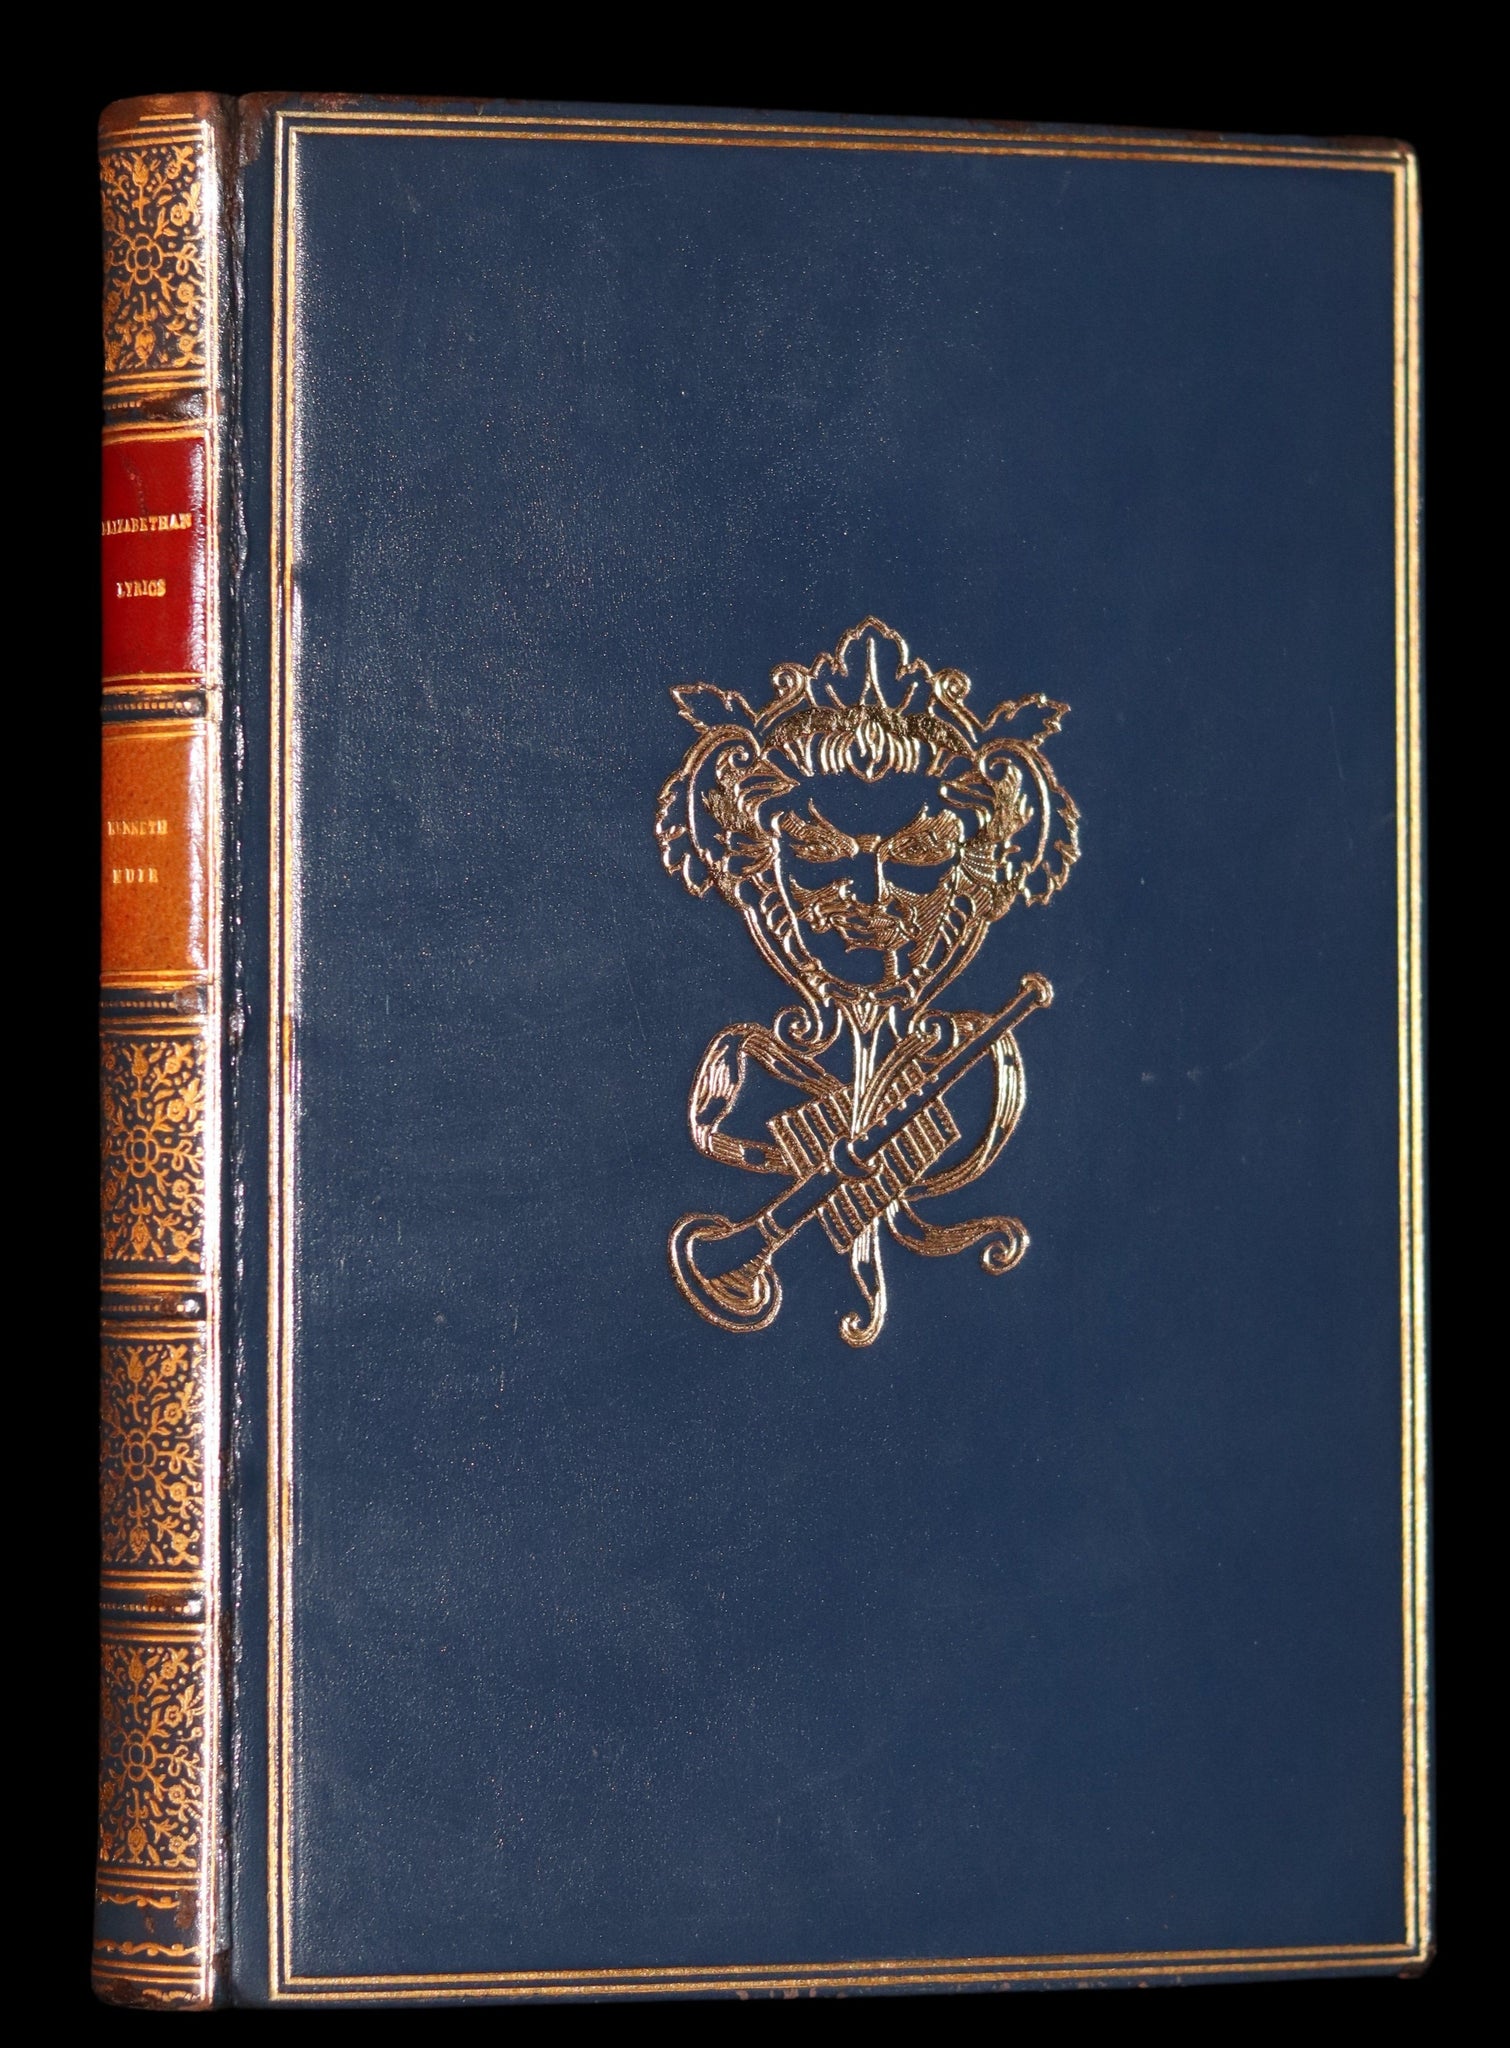 1952 First Edition bound by Bayntun - Elizabethan Lyrics, Lutanist, Plays & Masques Songs.